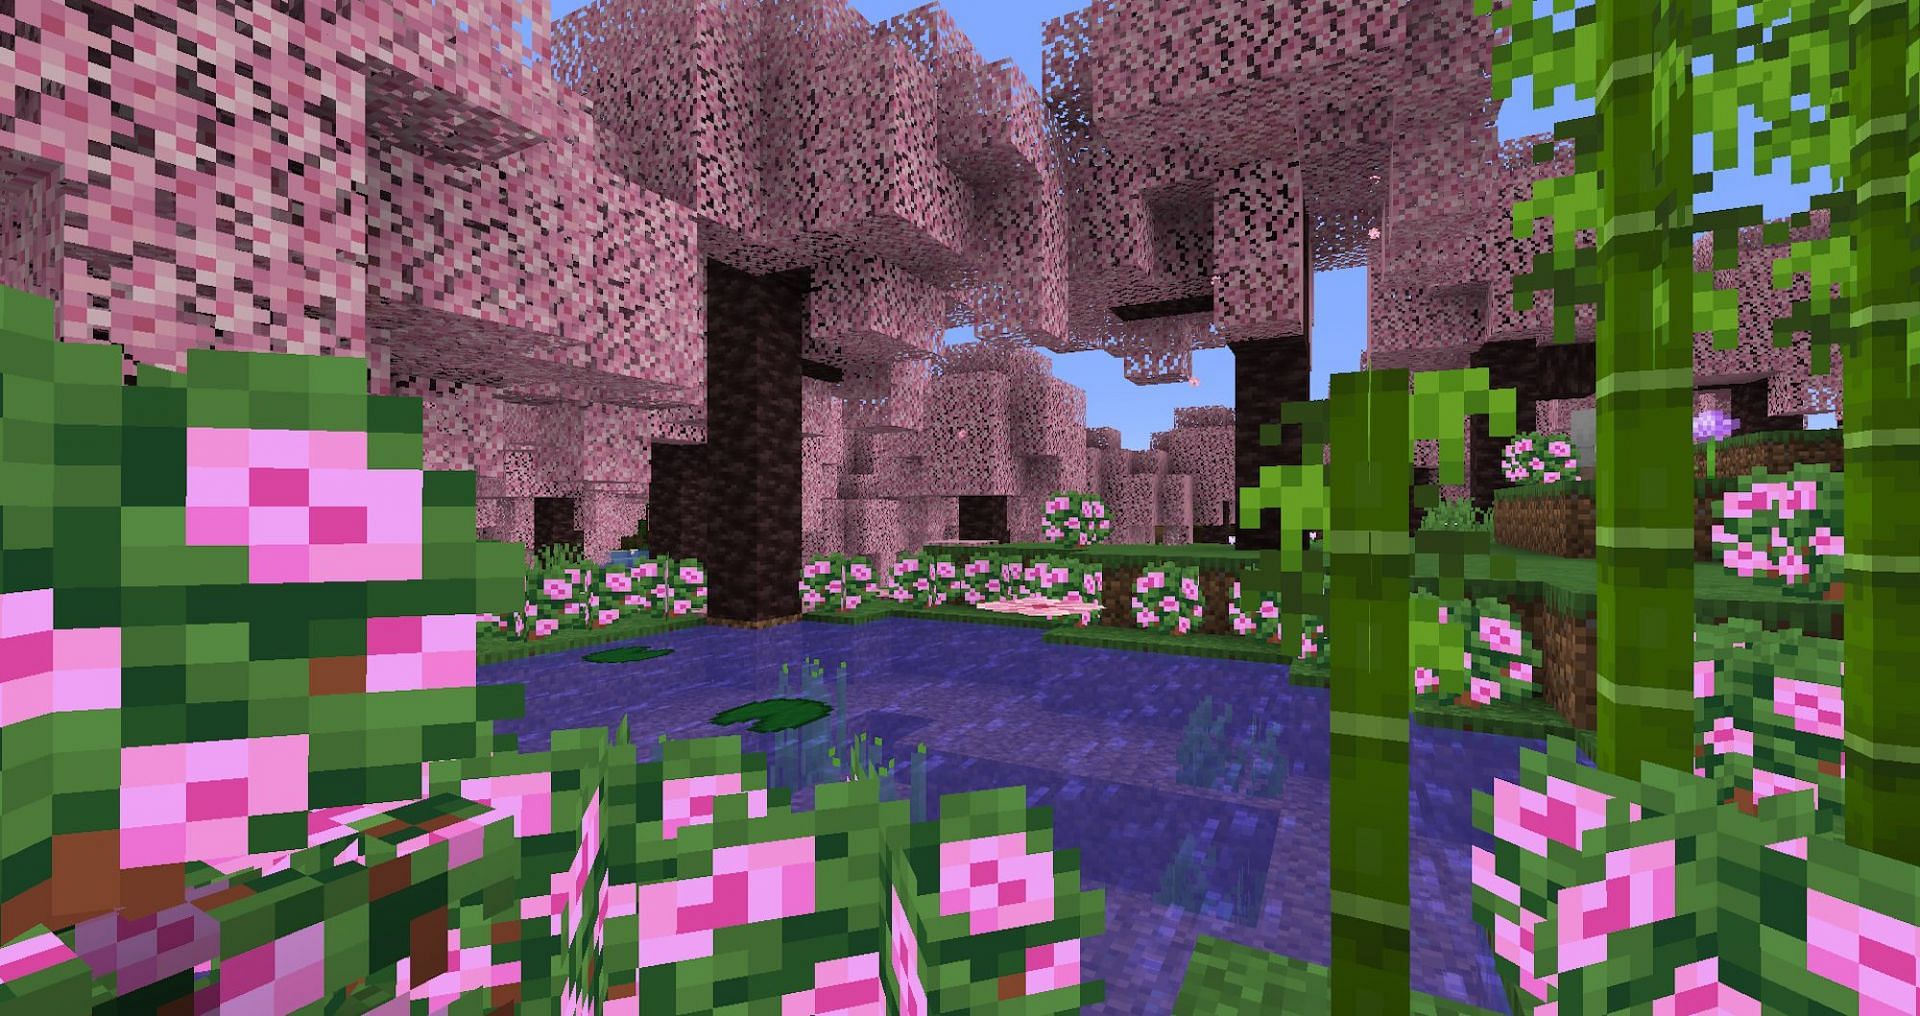 Cherry blossom trees [Image via Minecraft]